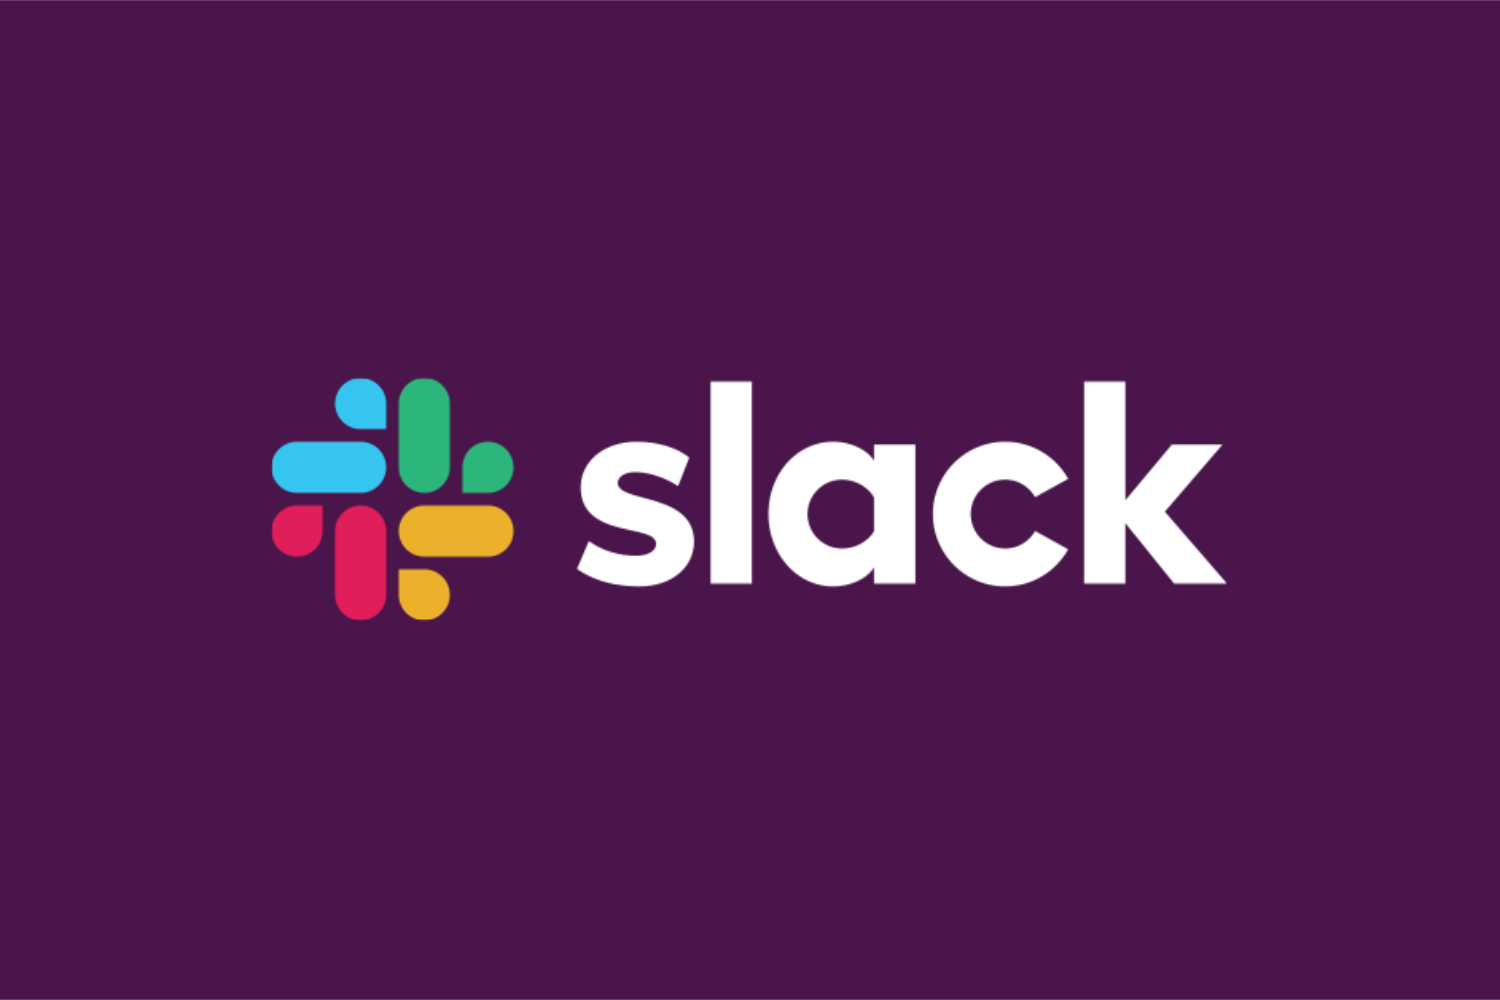 The Slack logo on a purple background.